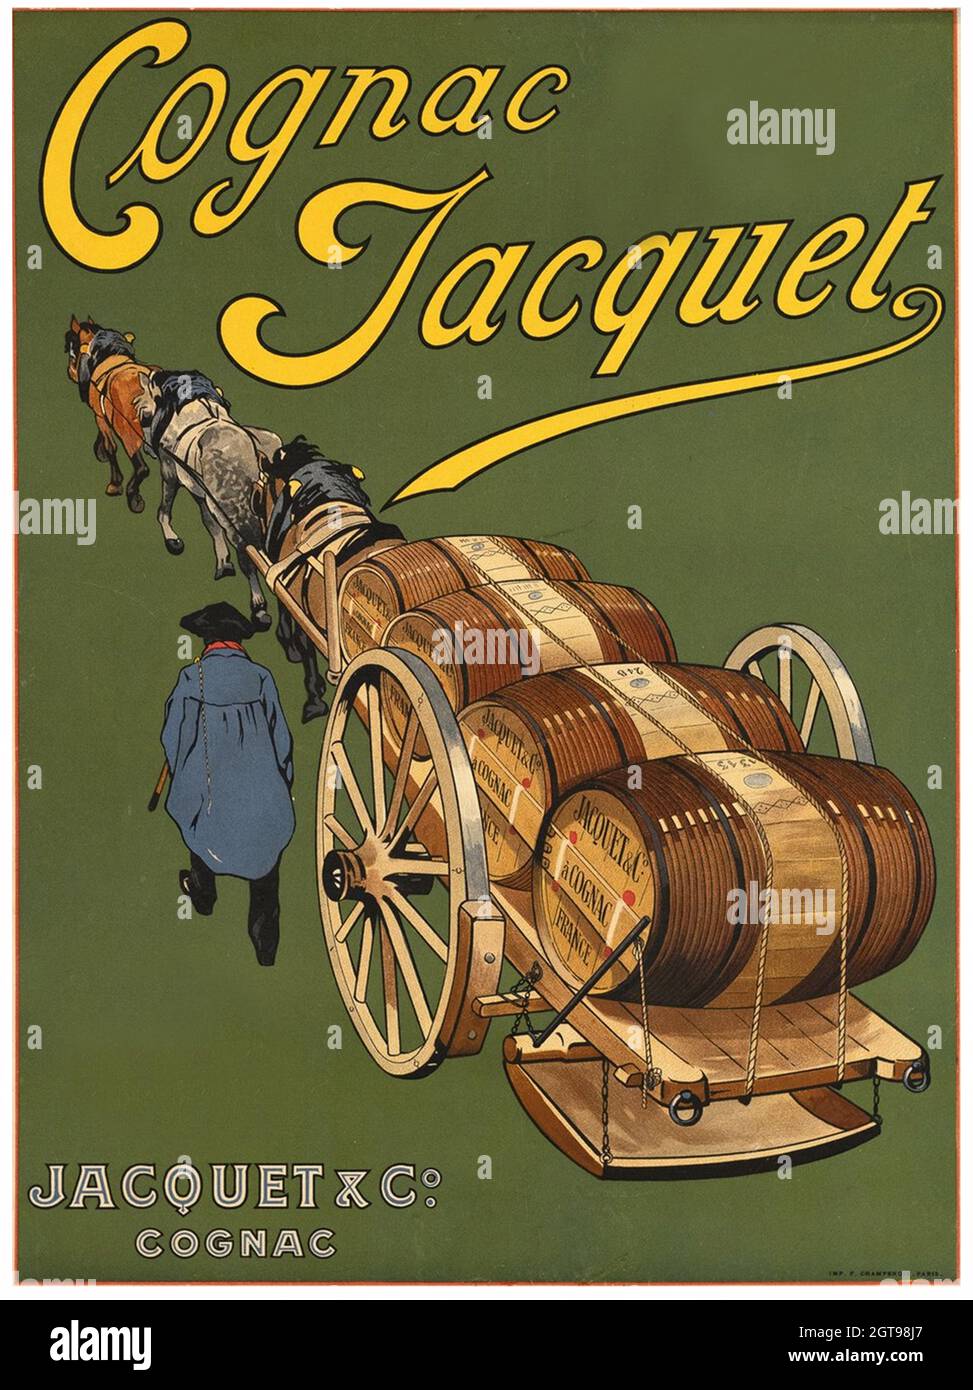 Vintage French alcohol poster - Cognac Jacquet, 1910s Stock Photo